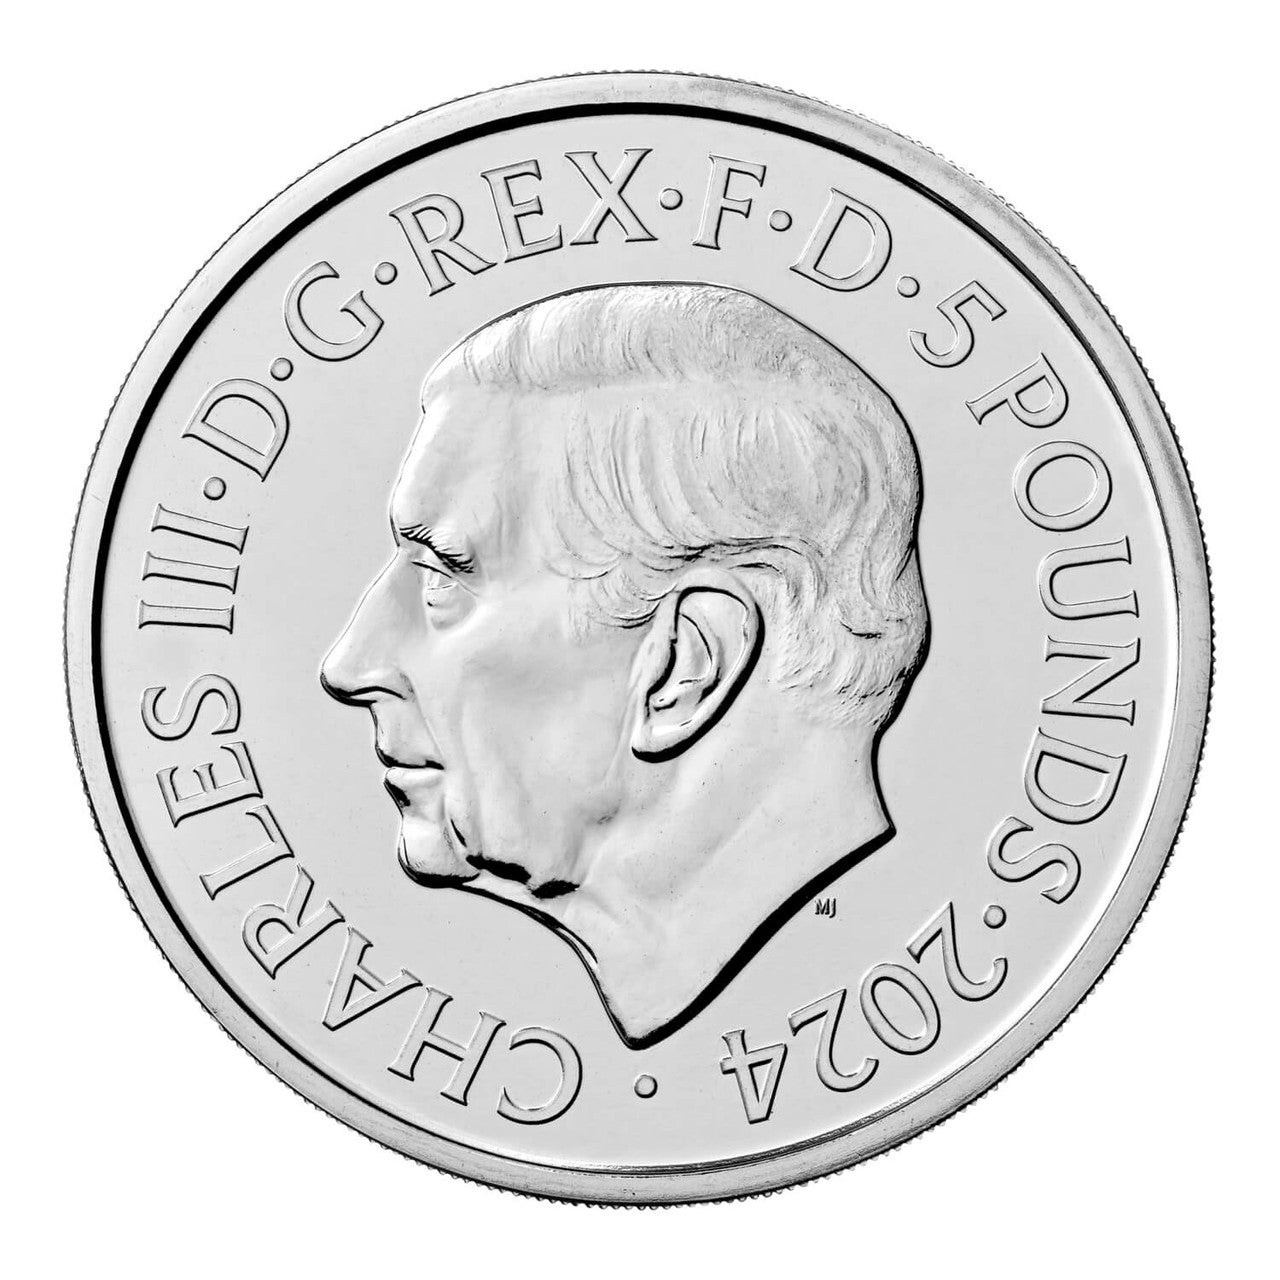 Royal Mint The Seymour Unicorn 5 pound 2024 Brilliant UNC coin